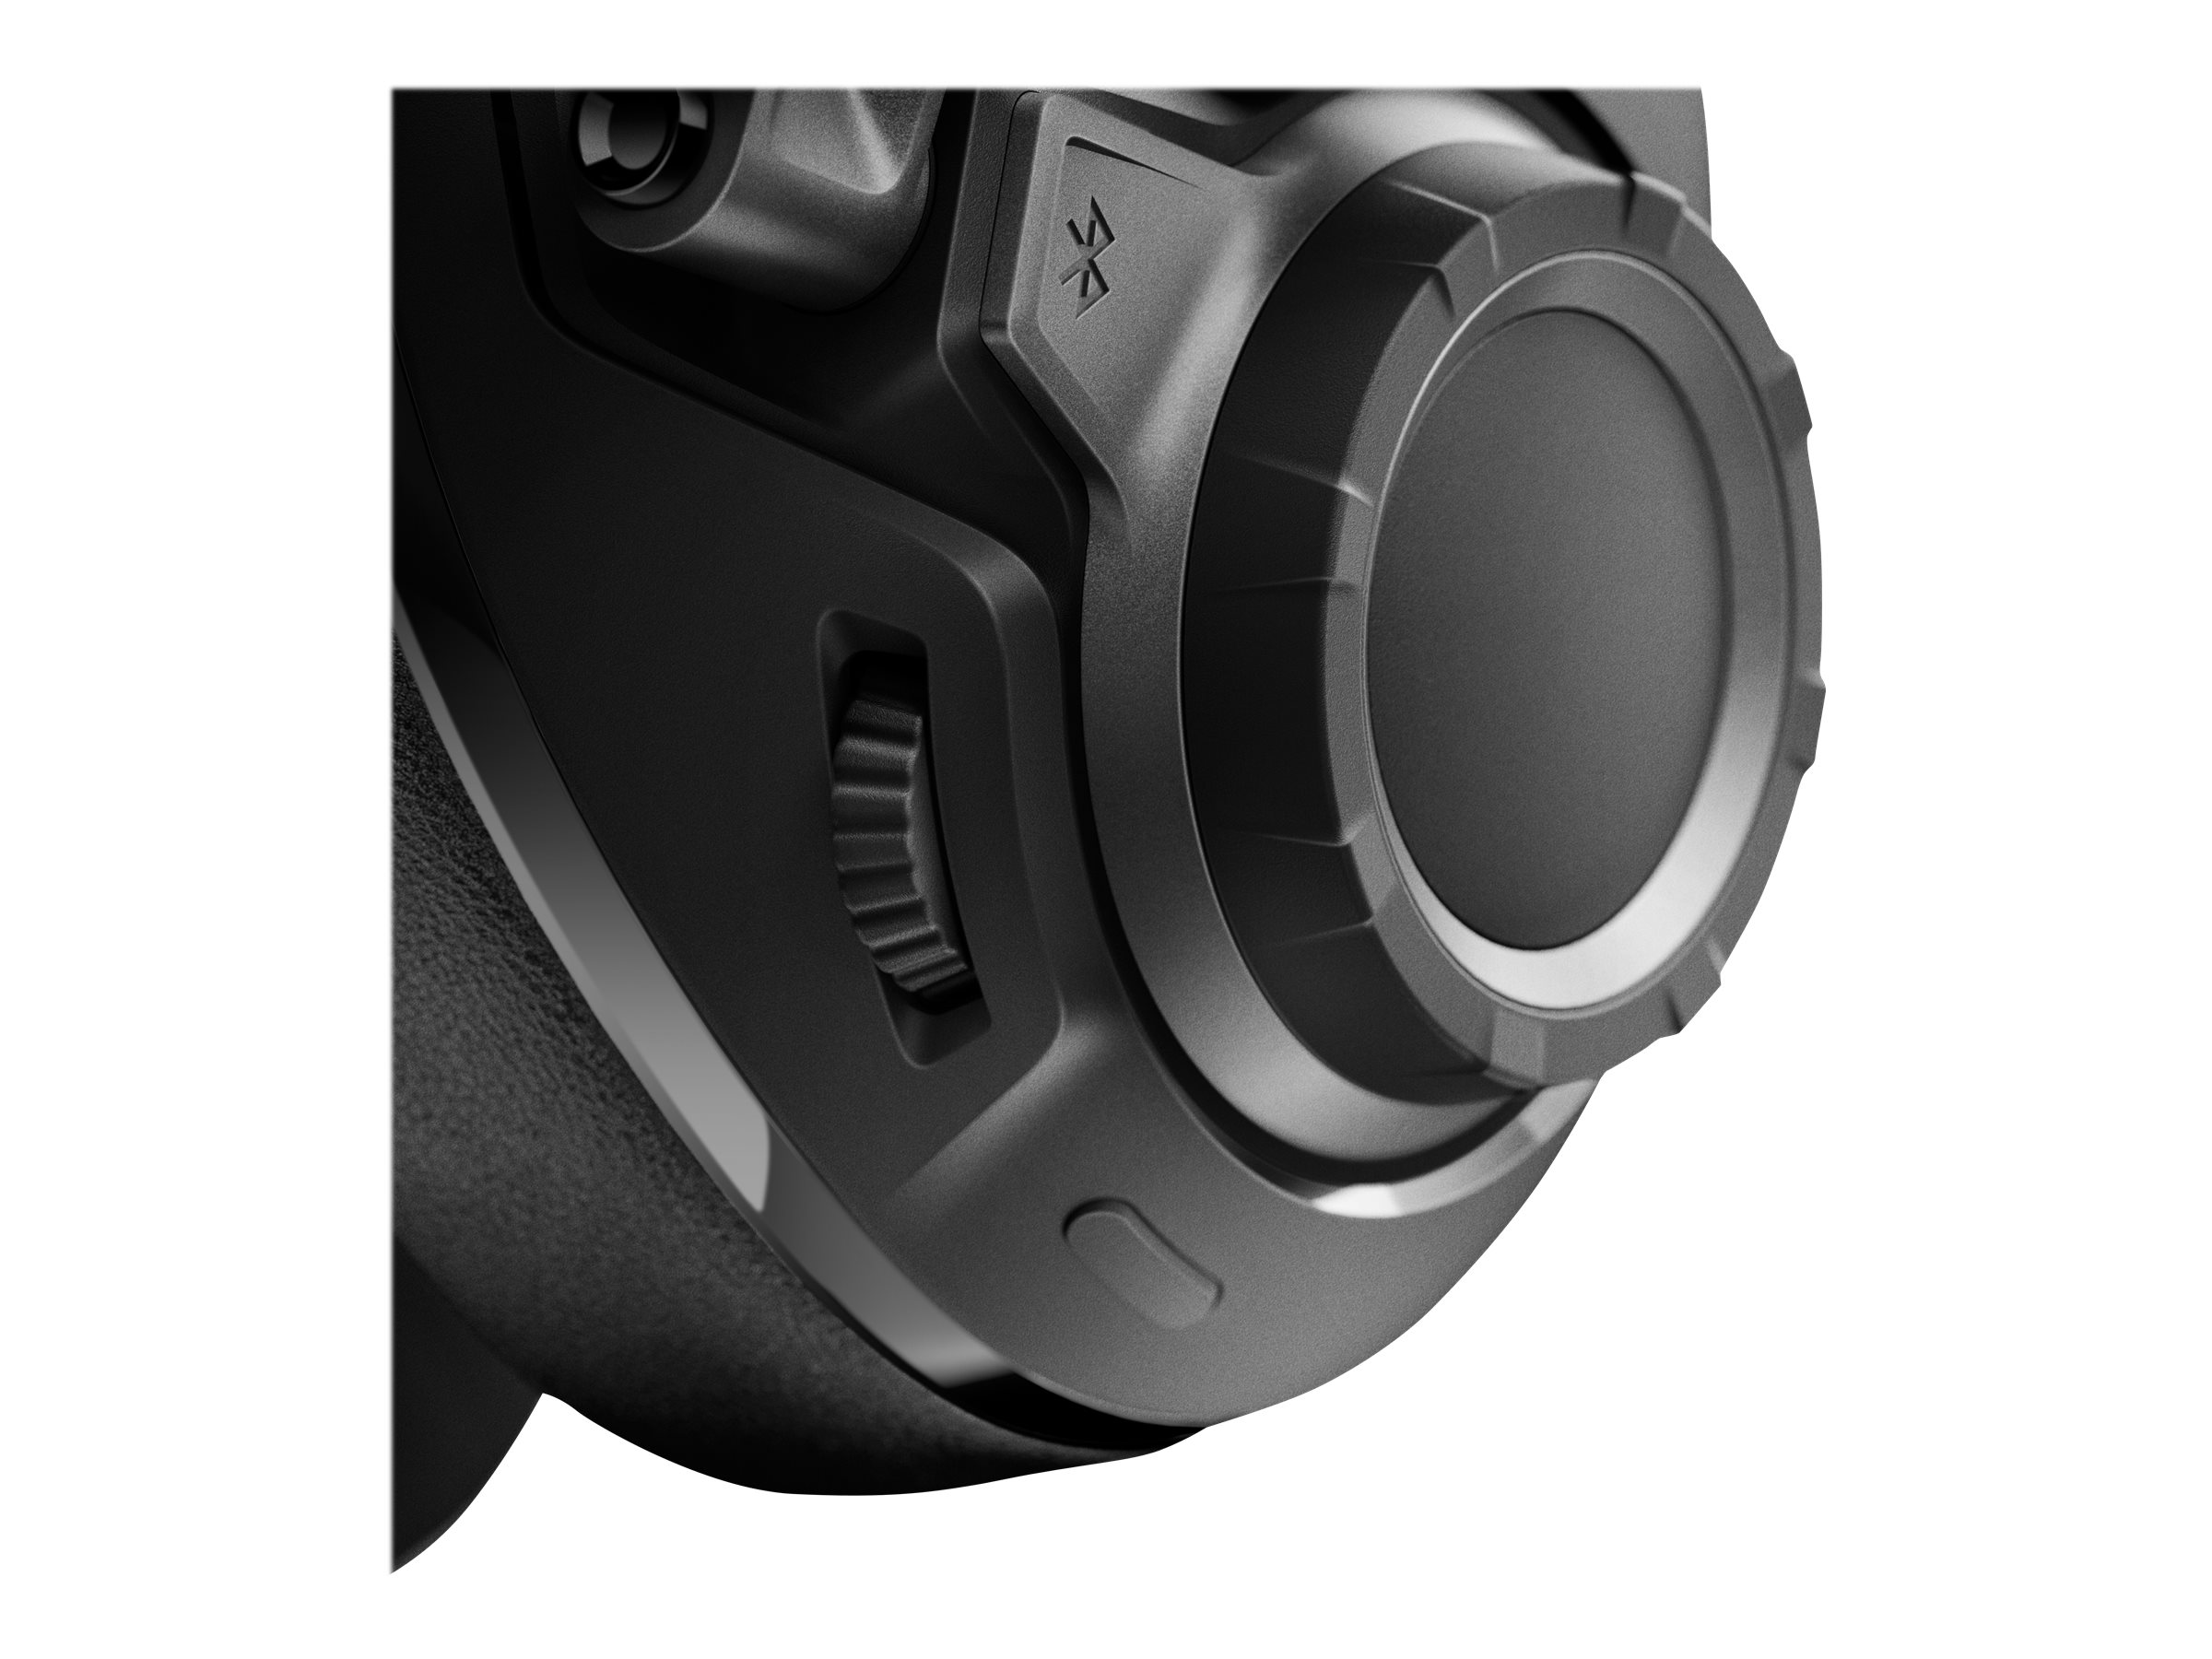 EPOS Sennheiser Over-Ear Wireless Gaming Headset - Black - GSP 670 - Open Box or Display Models Only